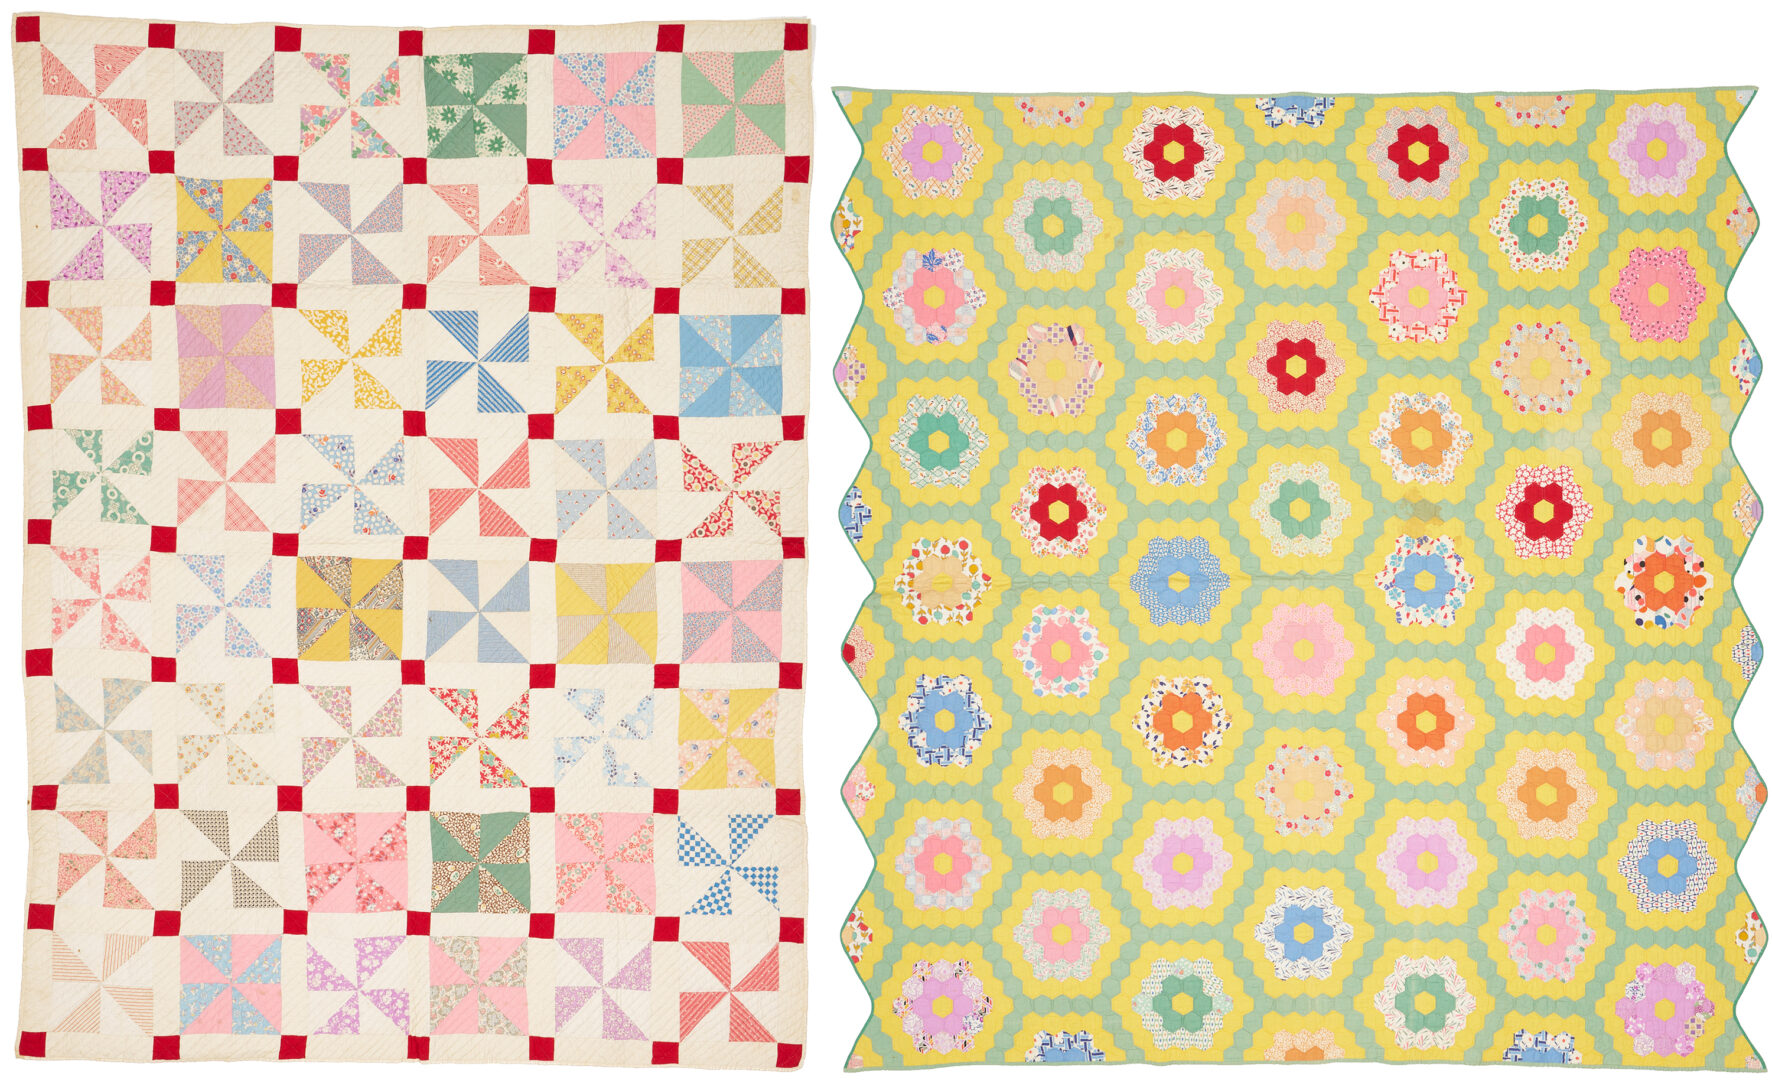 Lot 184: 2 American Quilts incl. Grandmother's Garden, Pinwheel Patterns